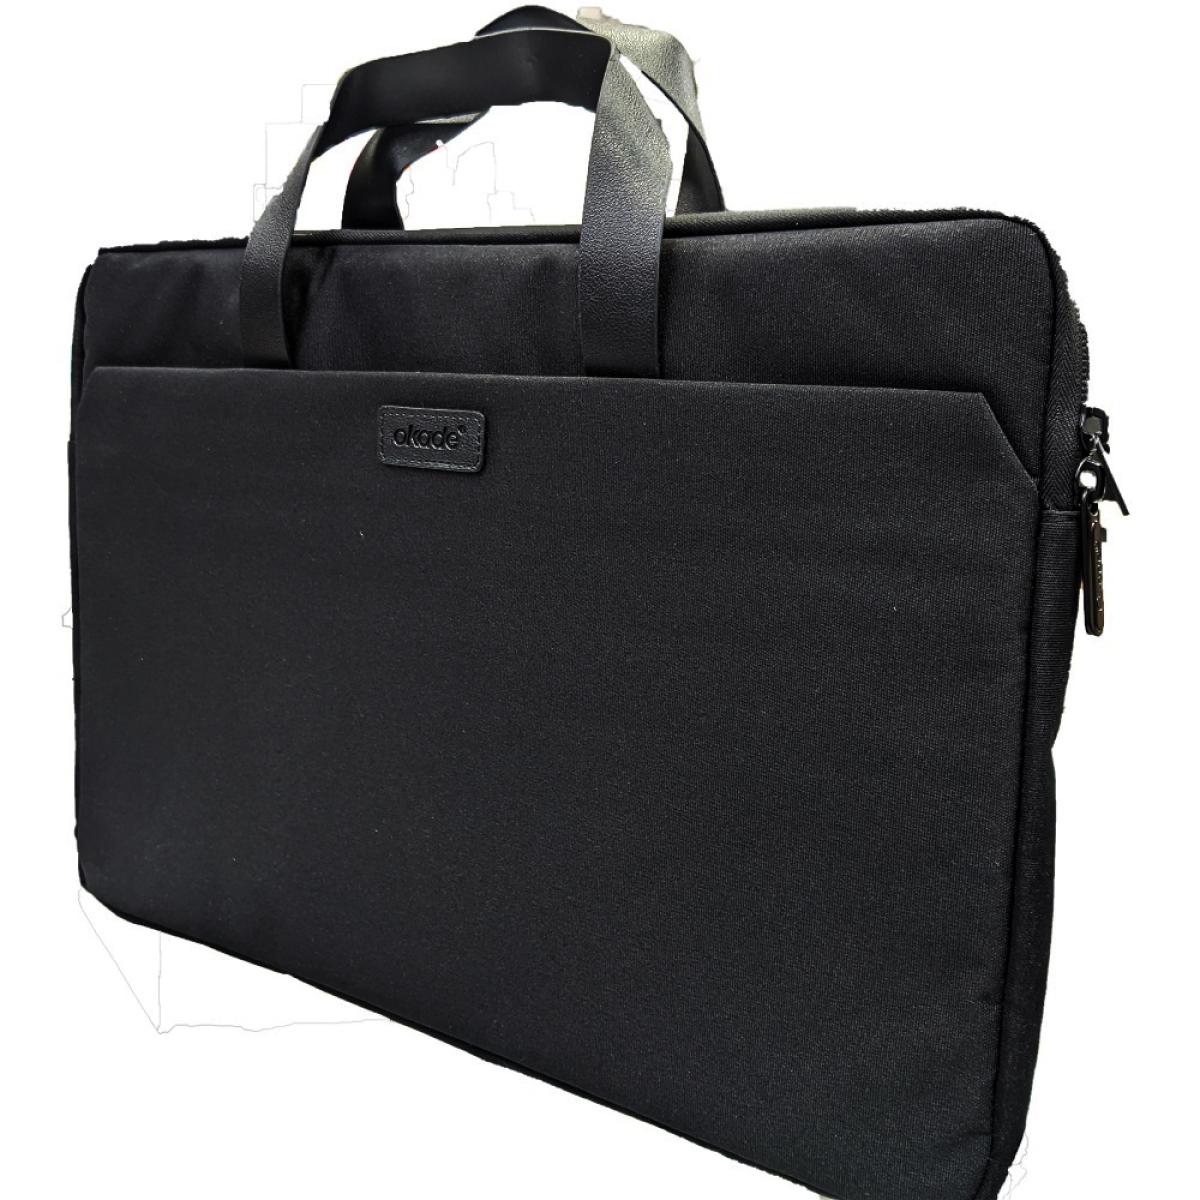 Okade T63 Black Laptop Bag 15.6 inch